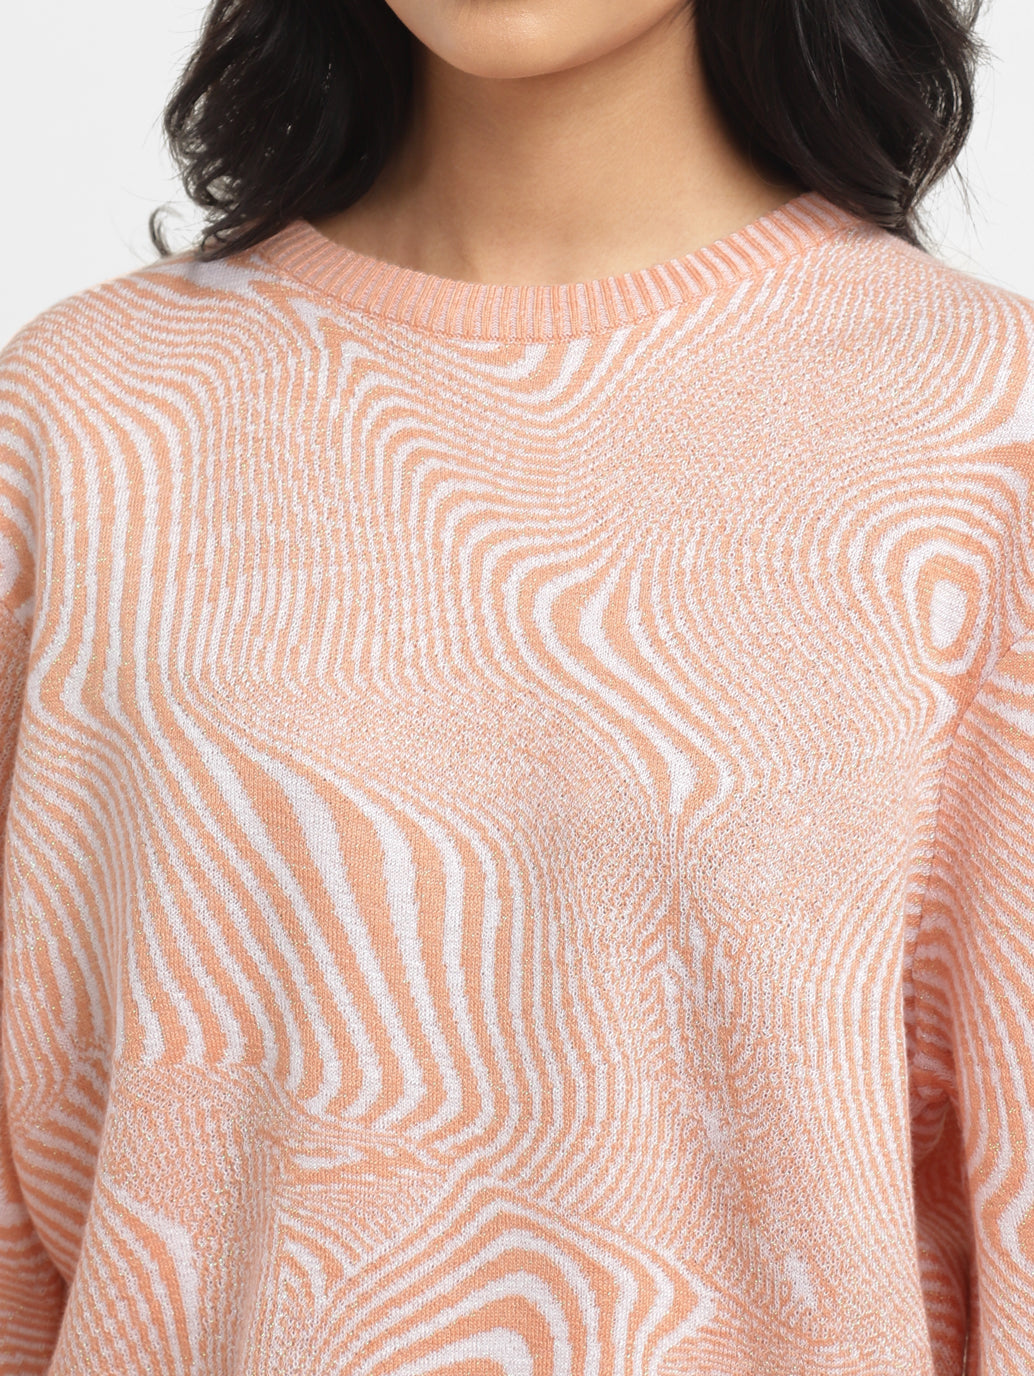 Women's Abstract Print Peach Crew Neck Sweater